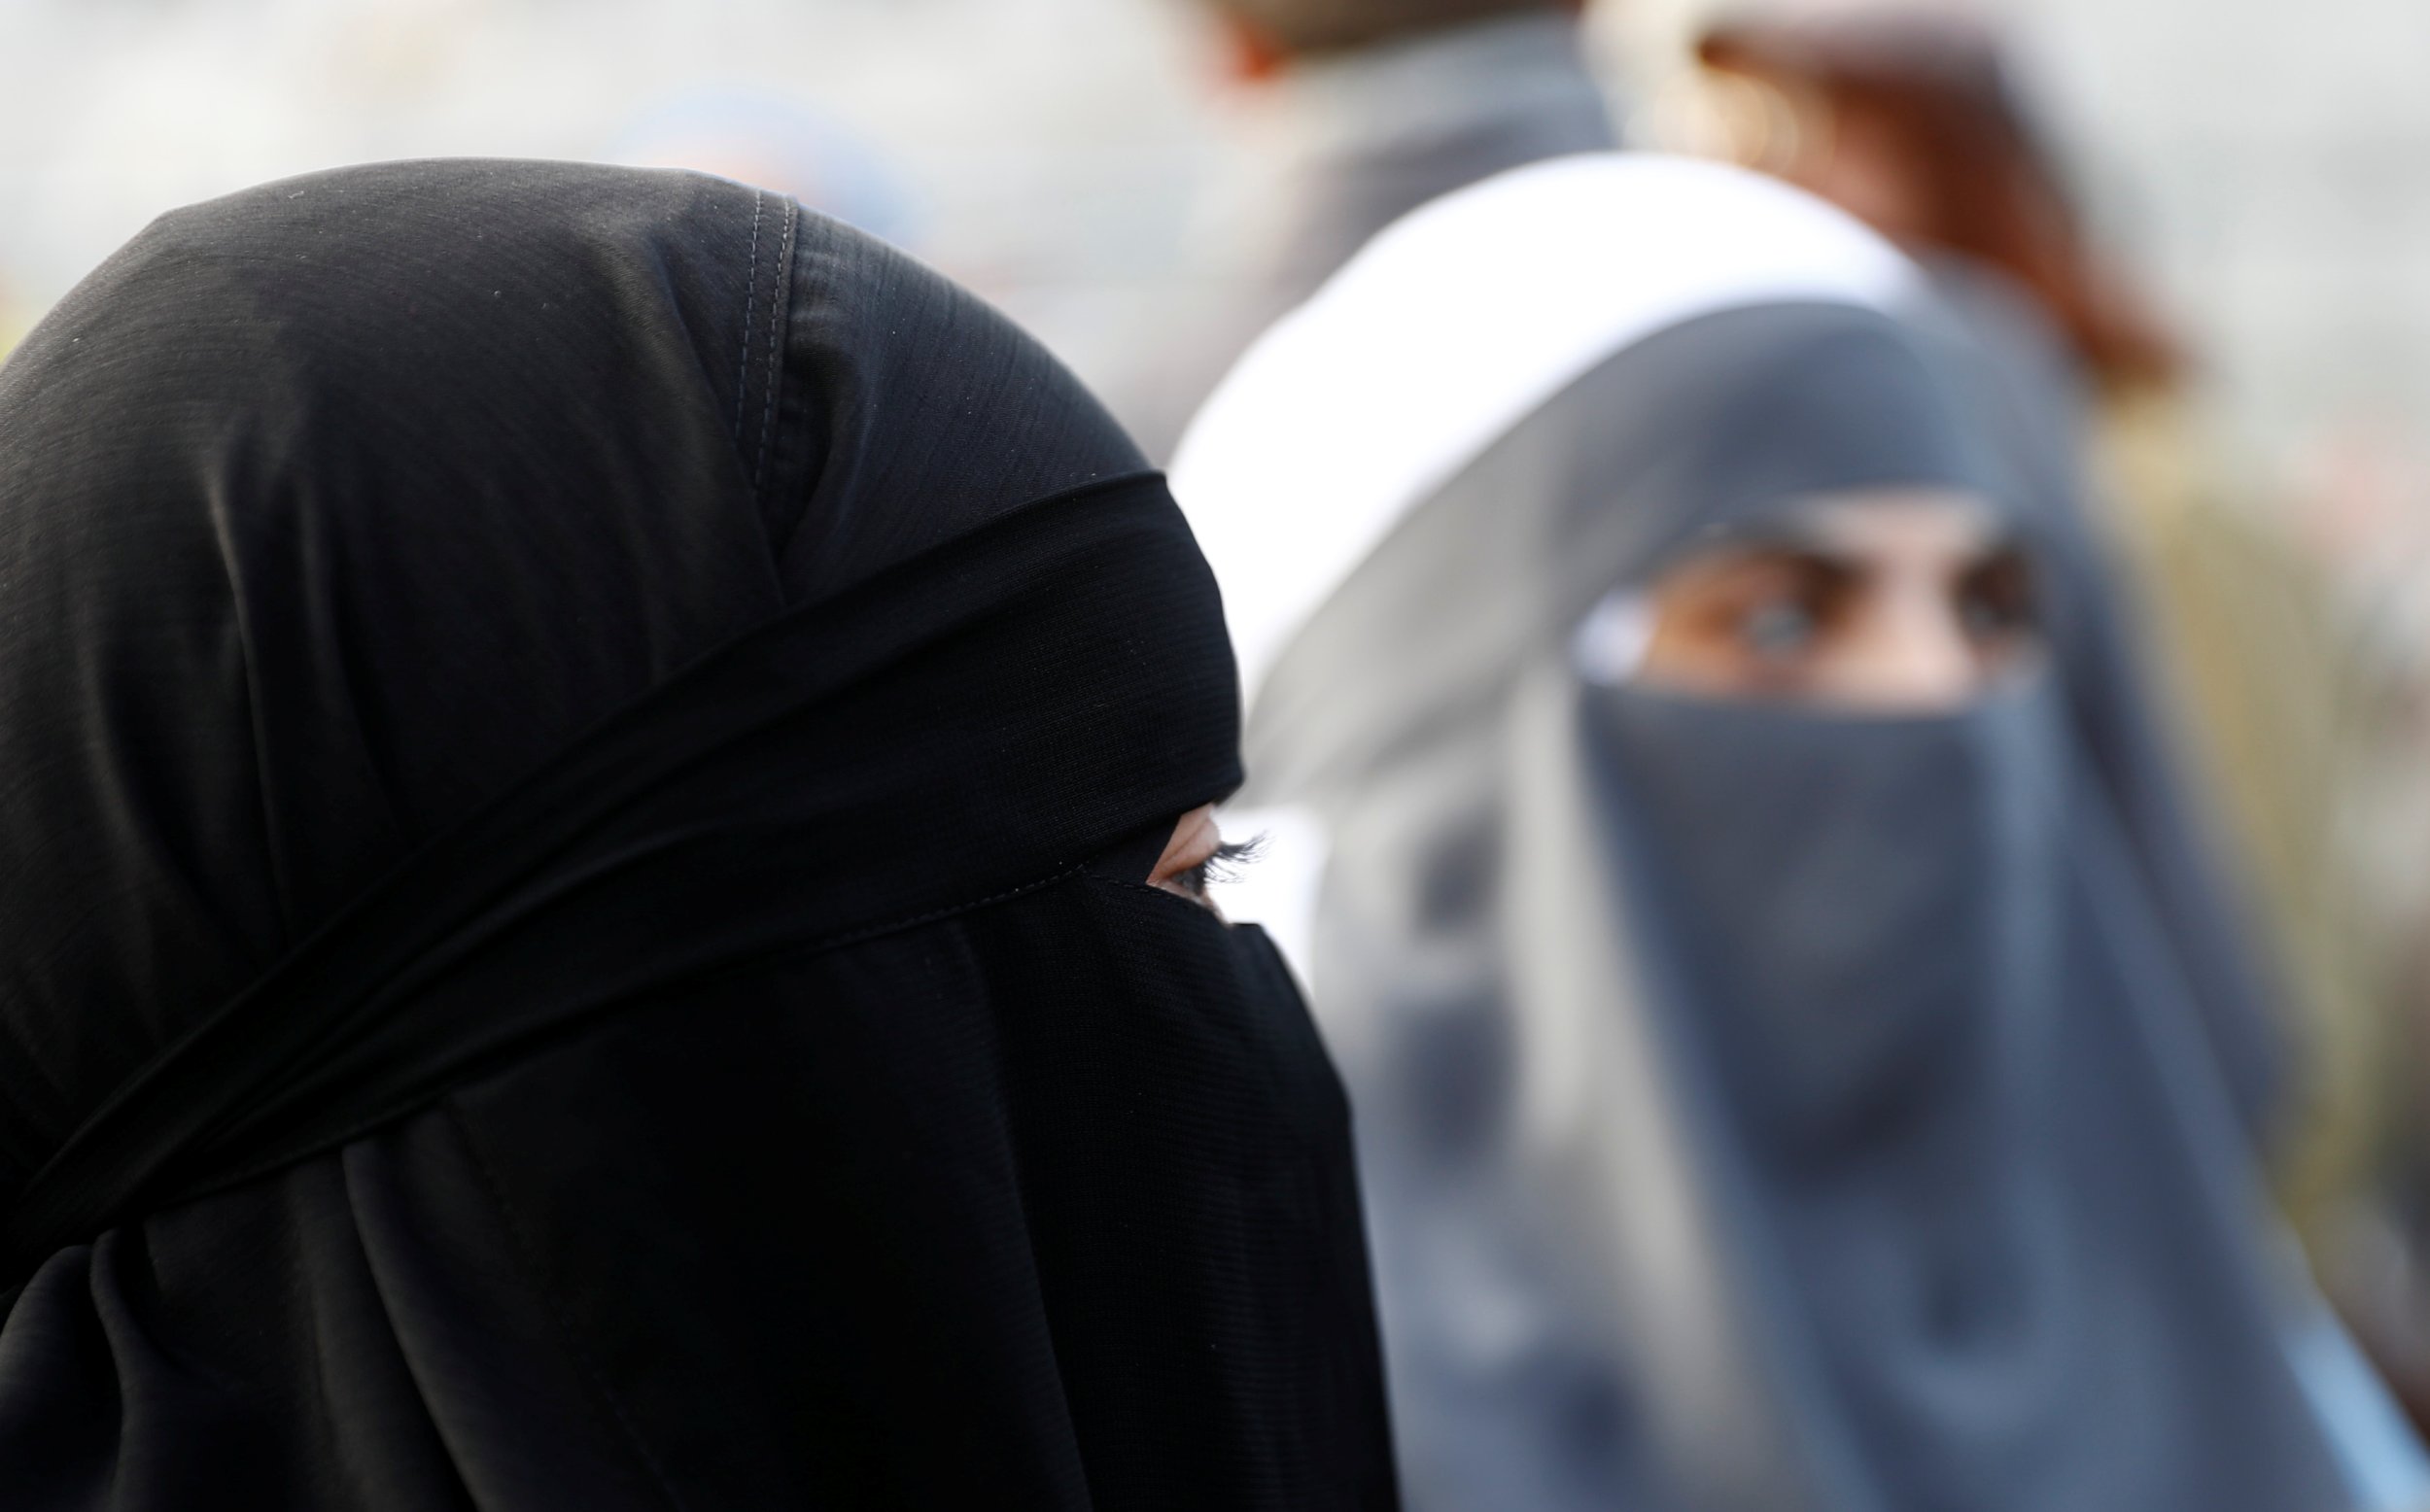 Sri Lanka Bans Burqas Countries That Prohibit Islamic Face Covering For Women Ibtimes